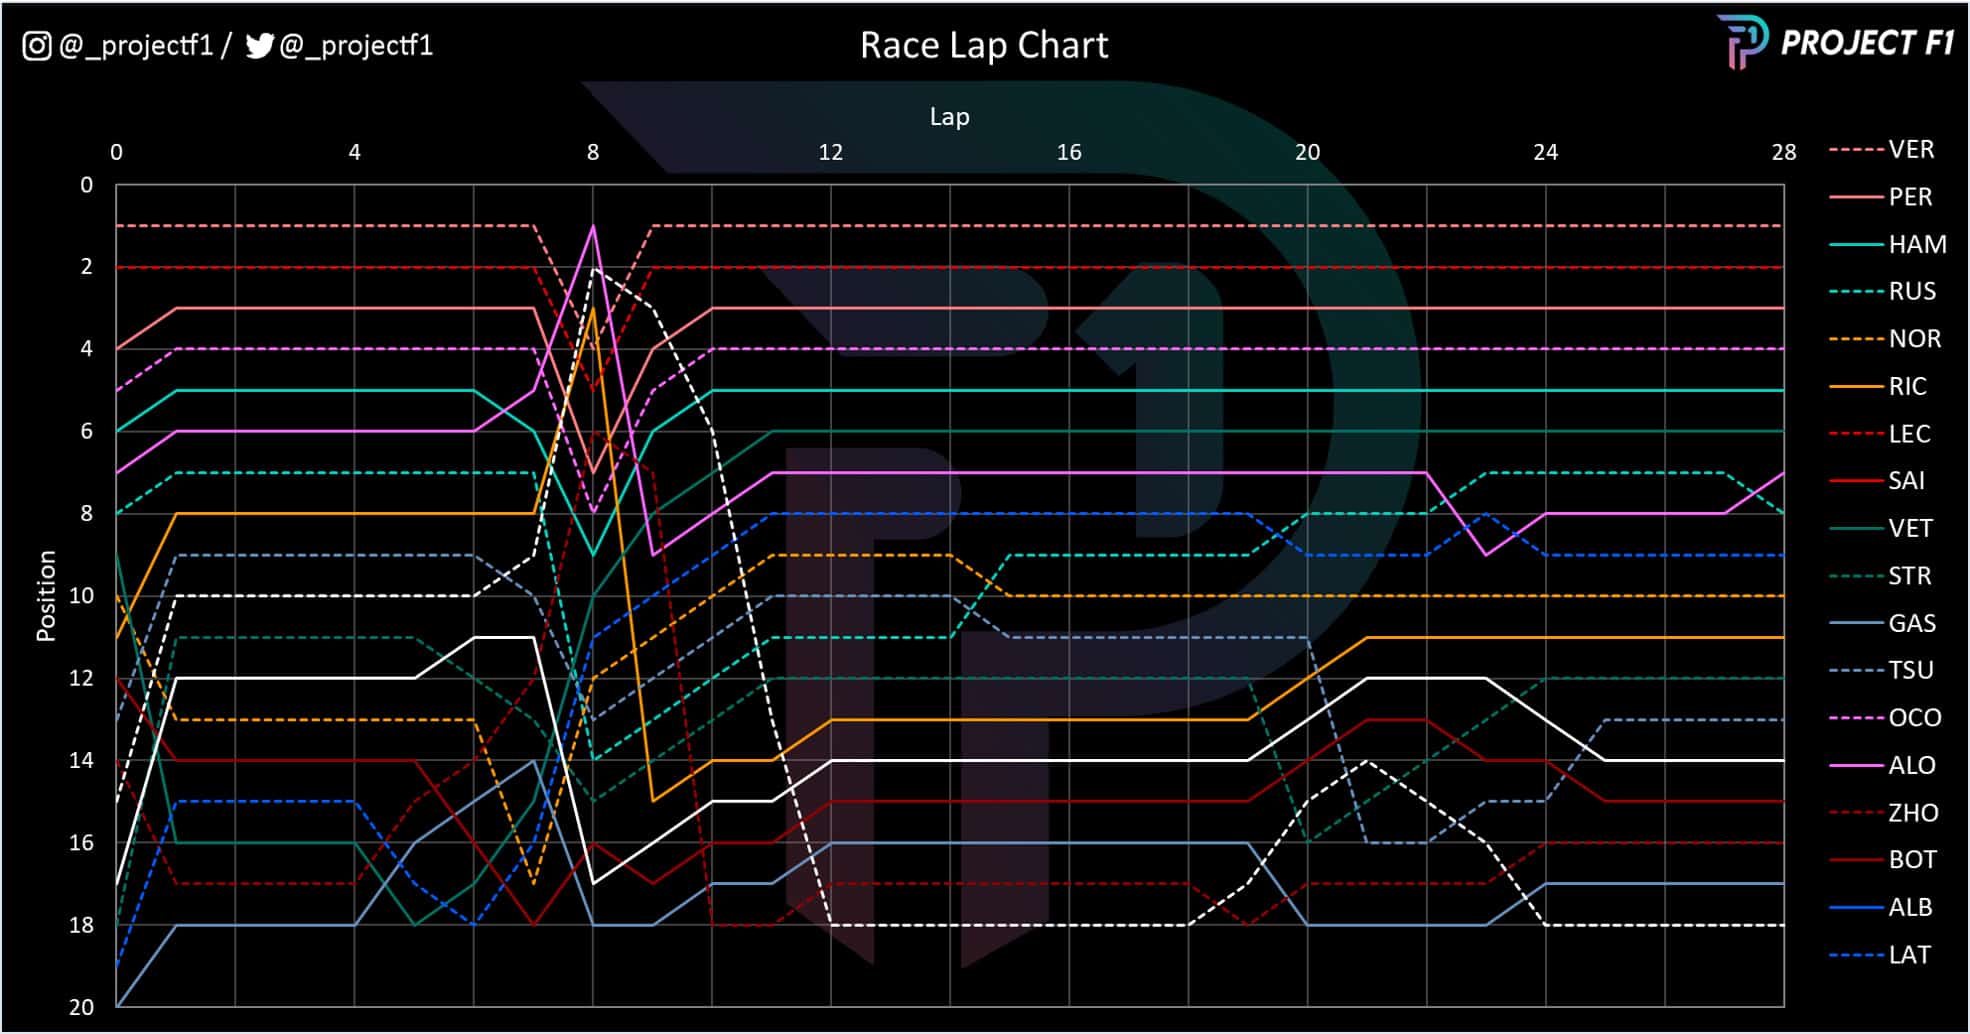 Race lap chart for 2022 Japanese GP